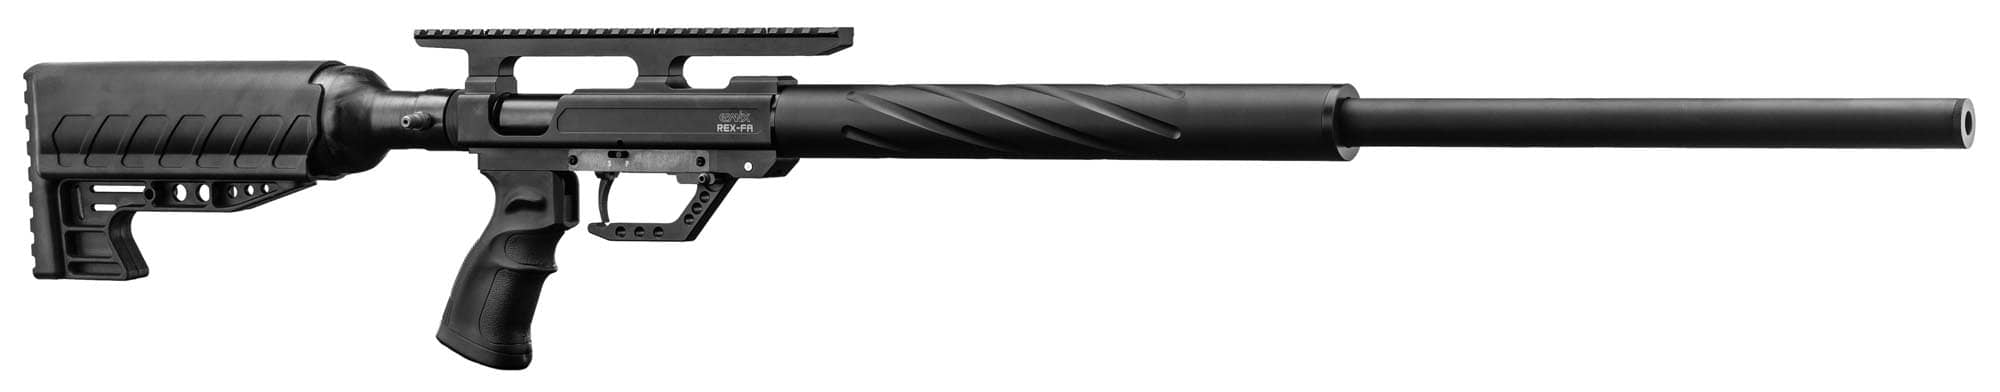 Evanix Sniper X2 Carabine Pcp Calibre 50 230 Joules